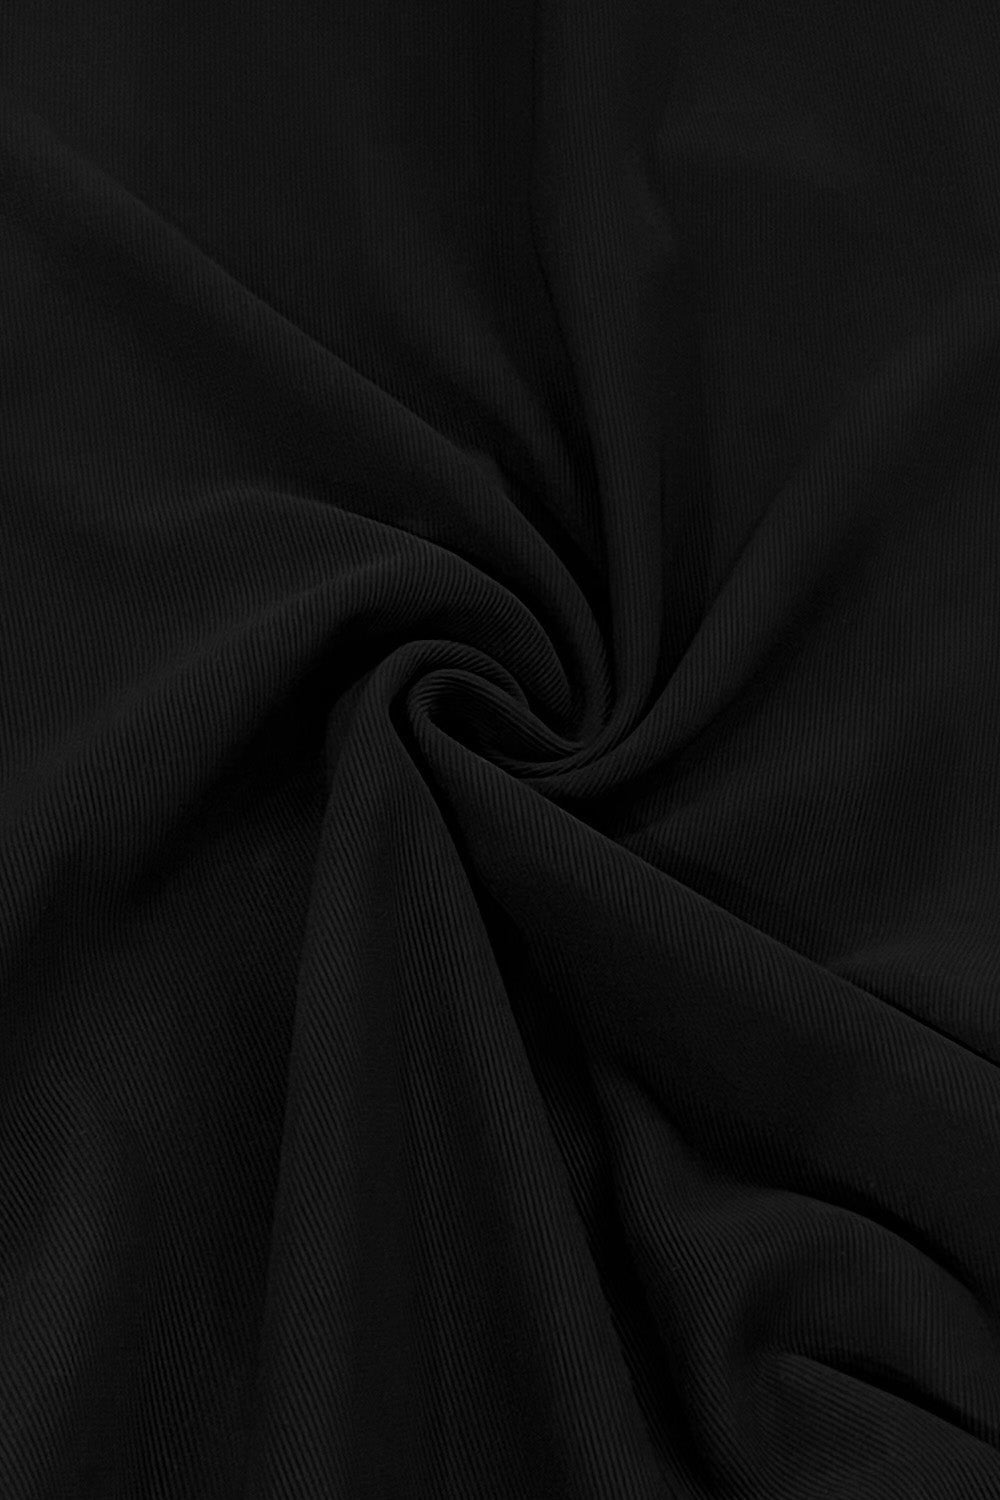 Ribbed super stretch fabric in Black colour